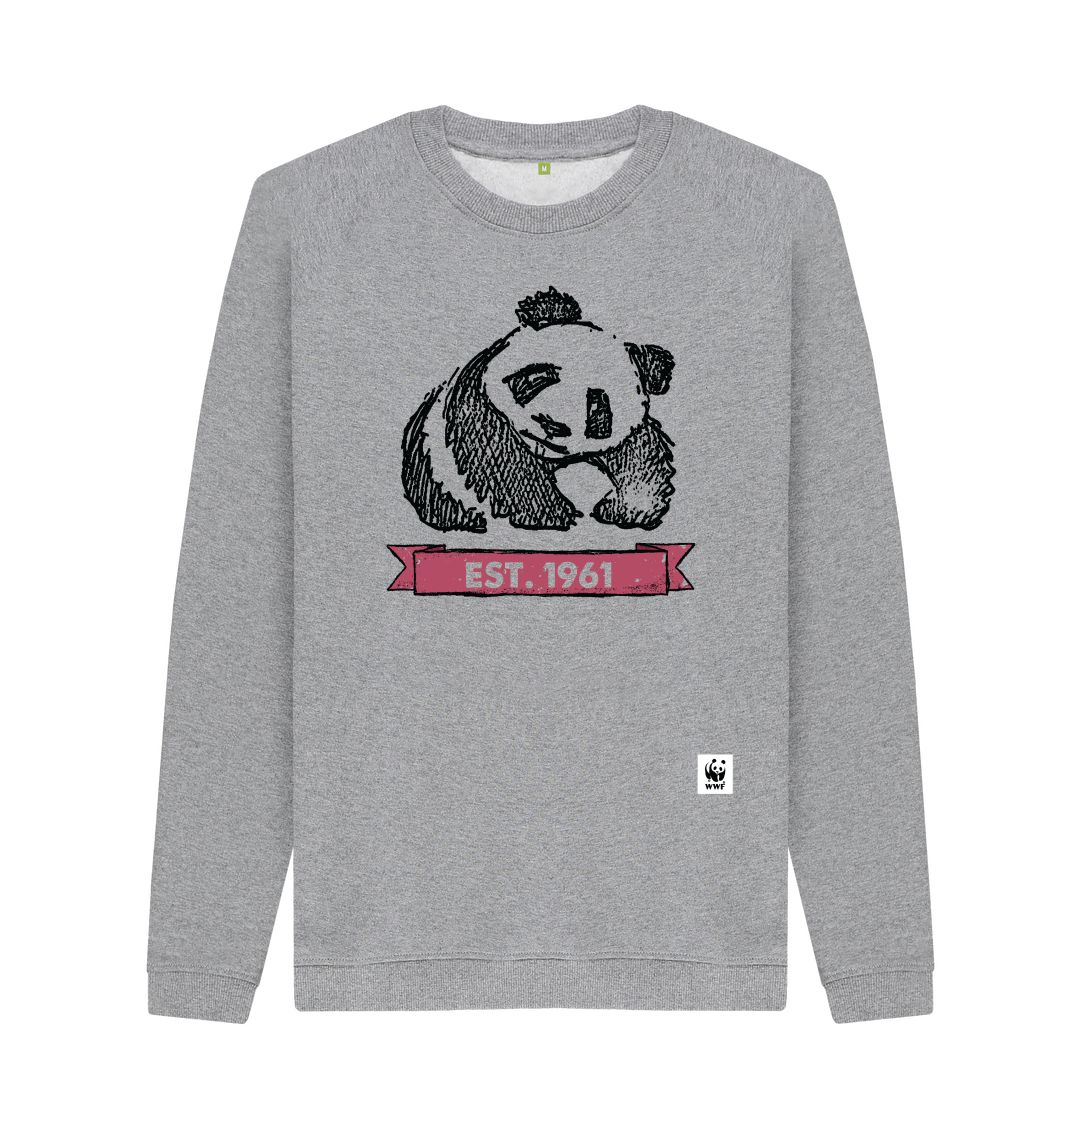 Panda Collection | WWF International Store